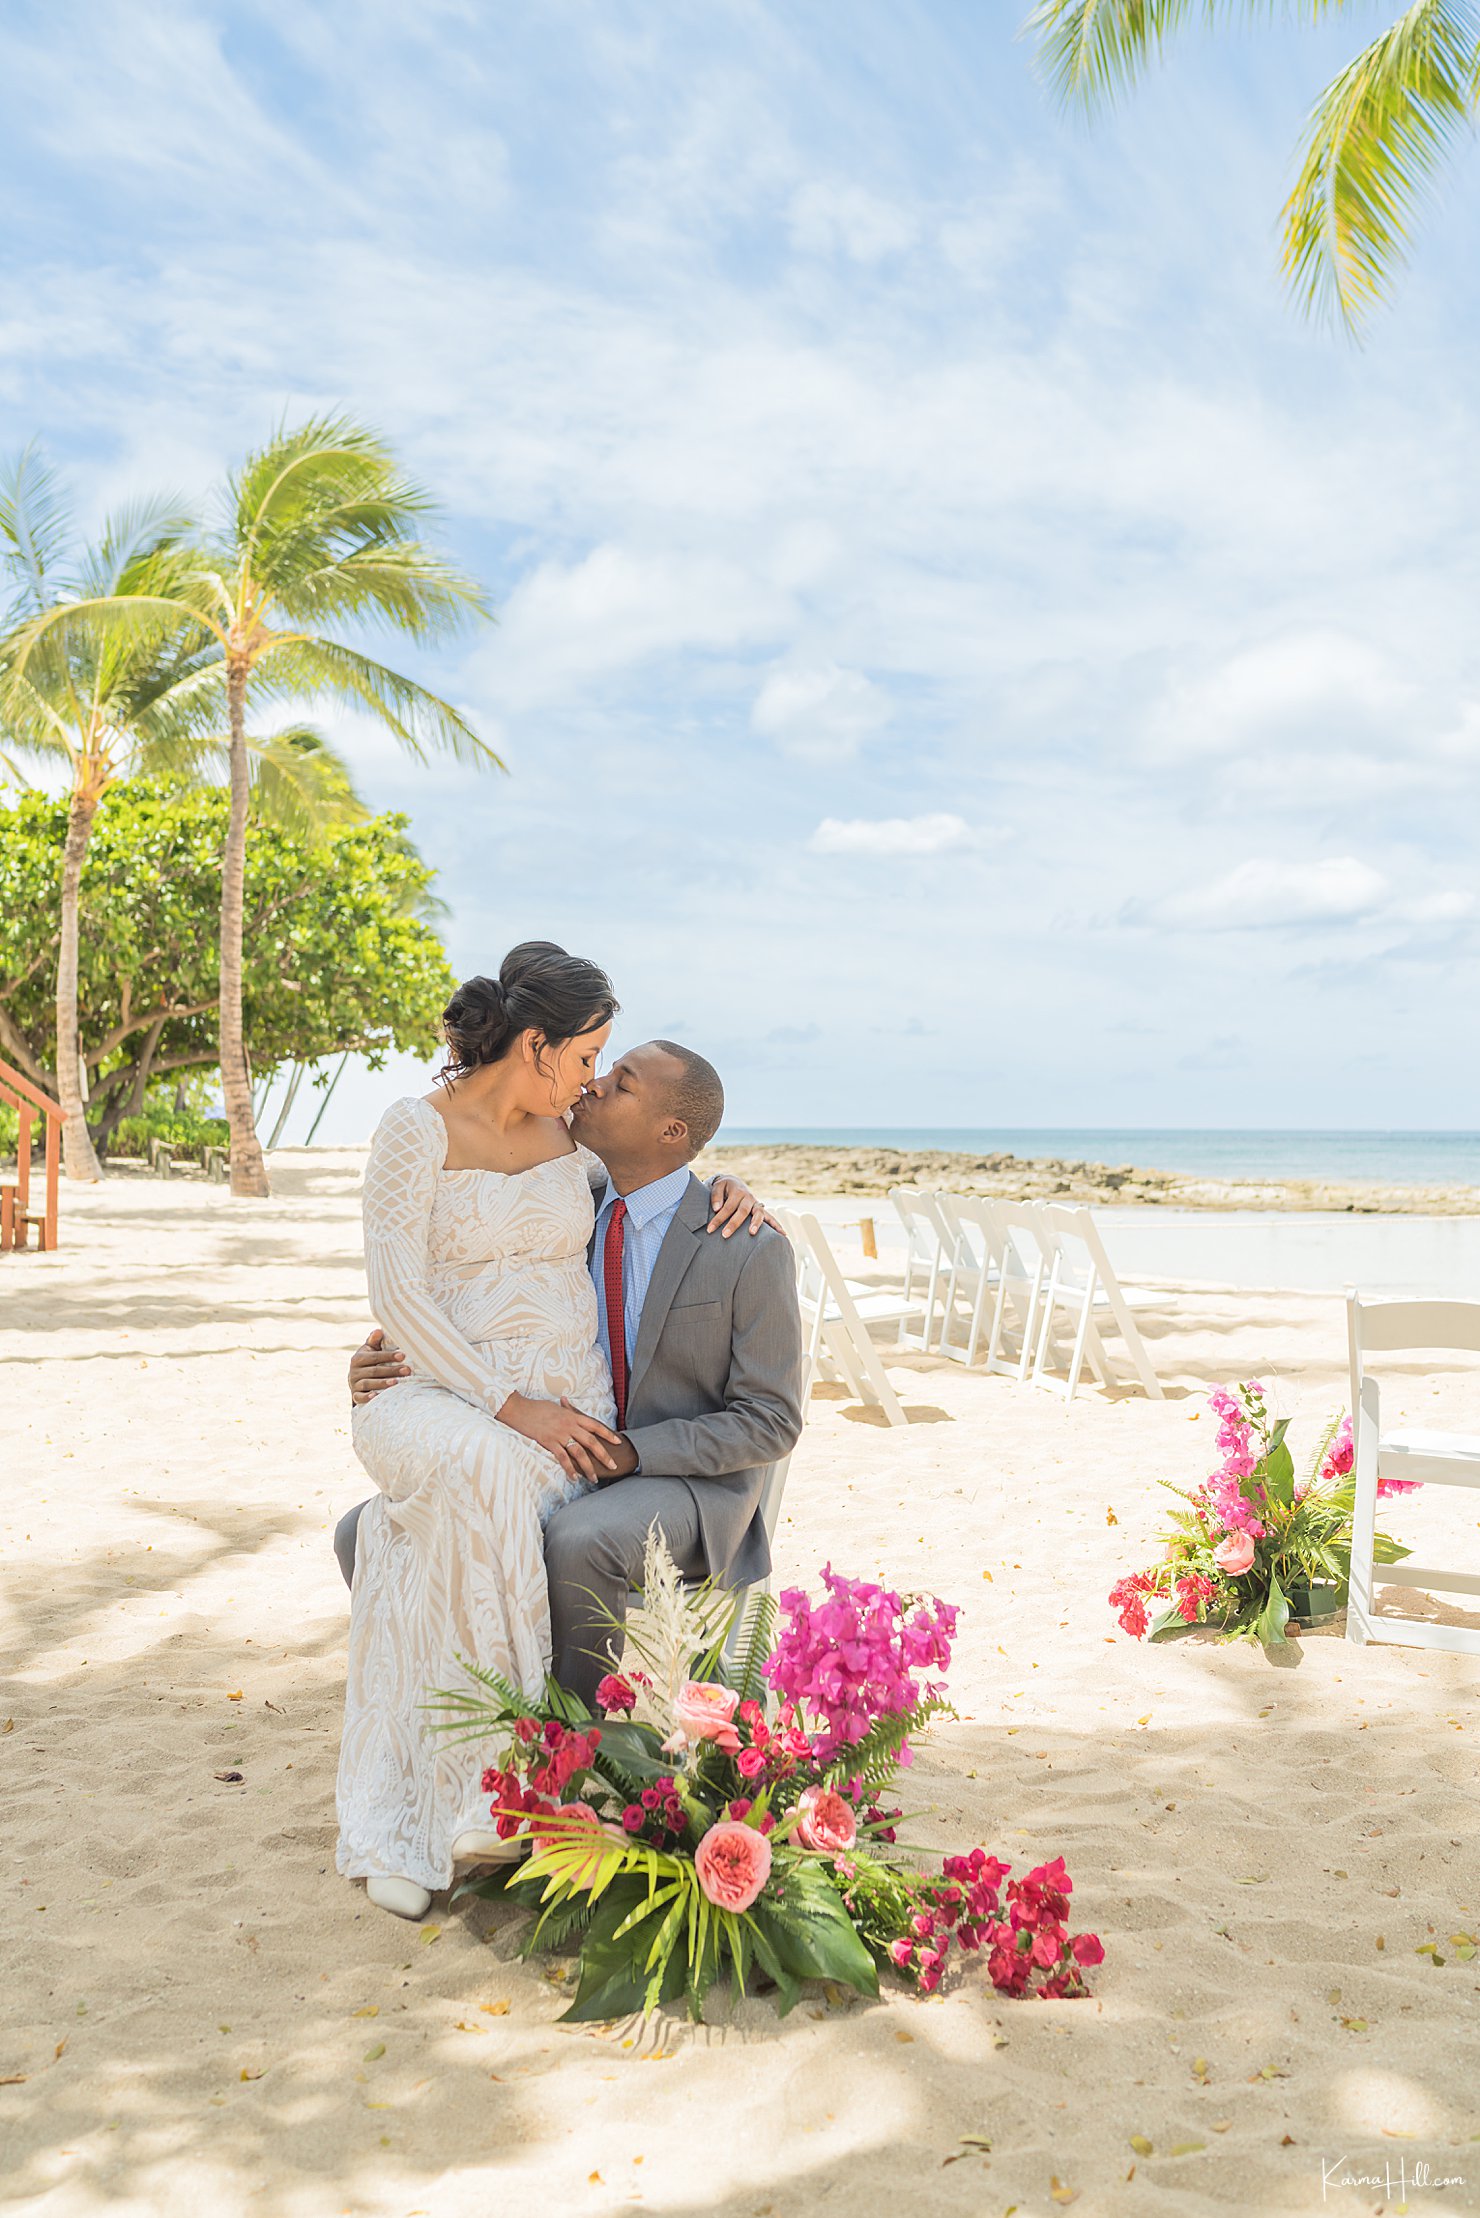 getting married in oahu hawaii